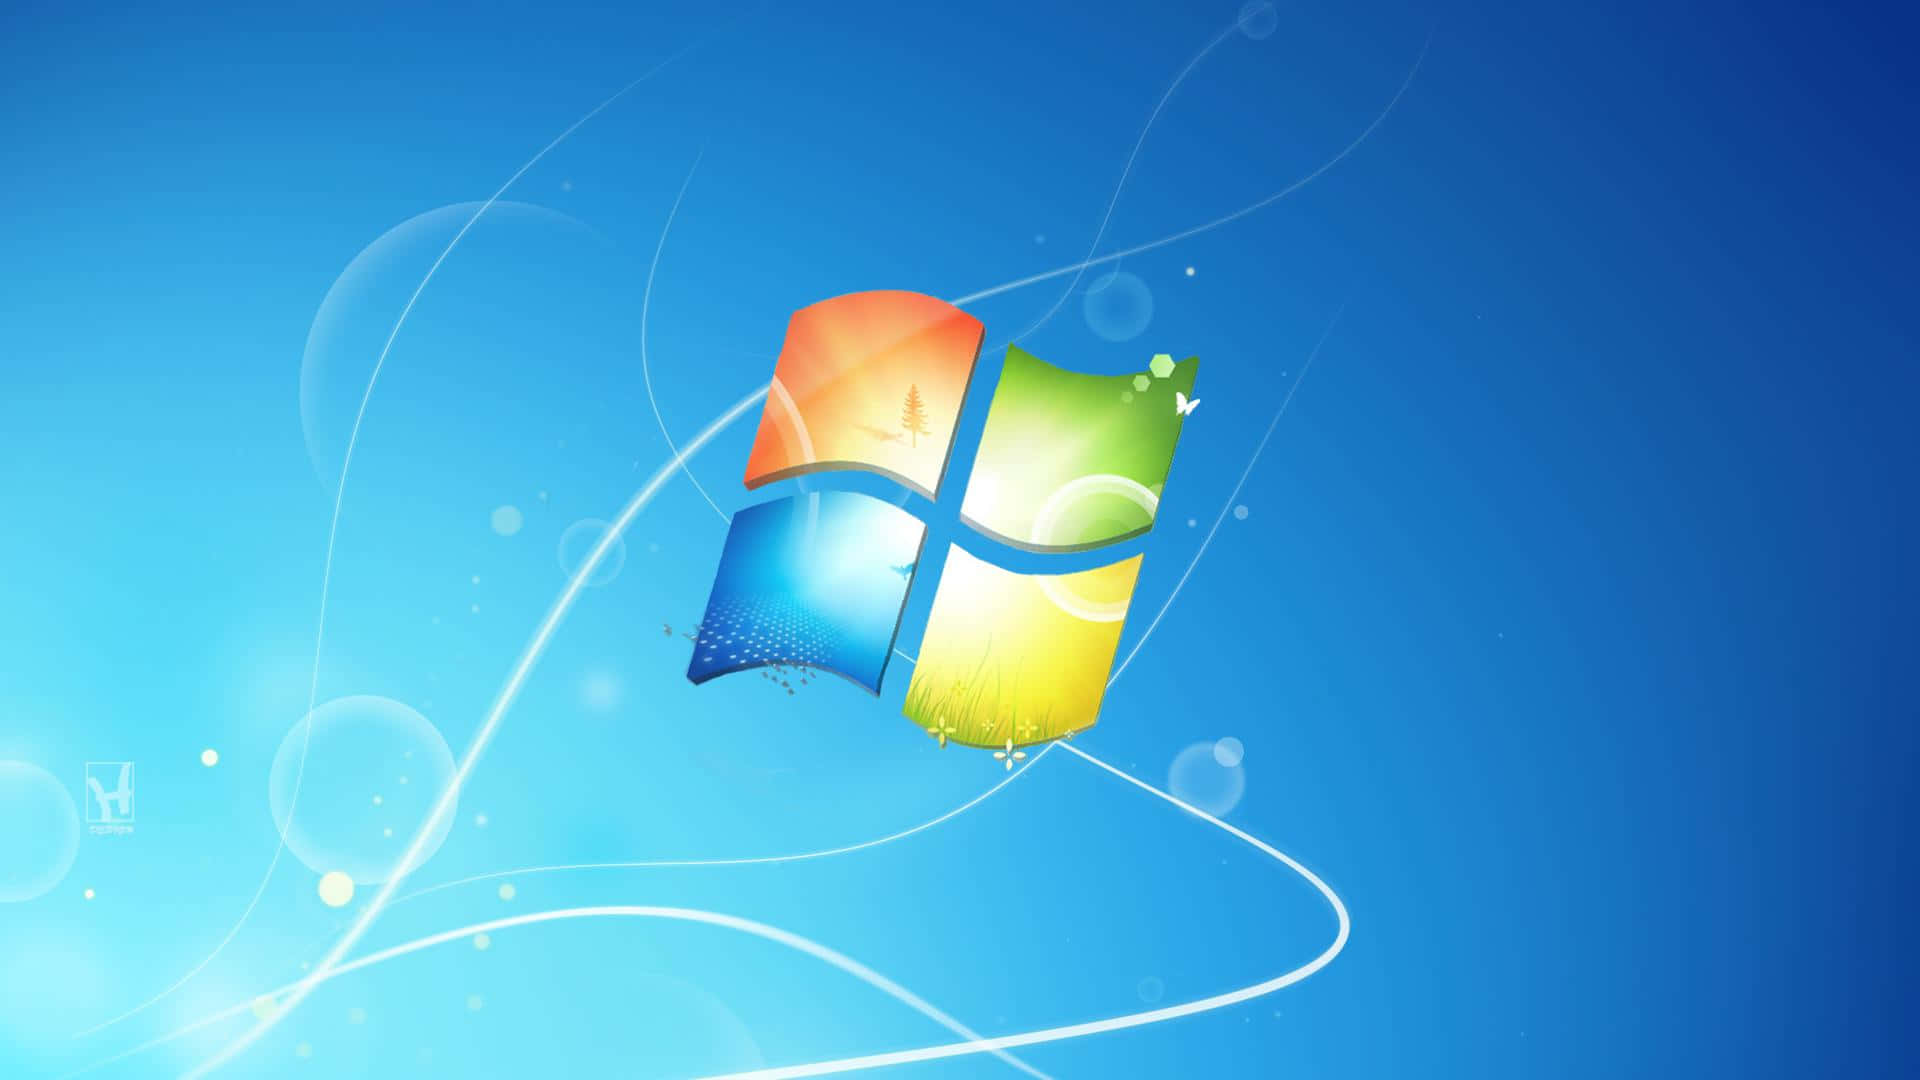 Stunning Windows 8 Desktop Wallpaper